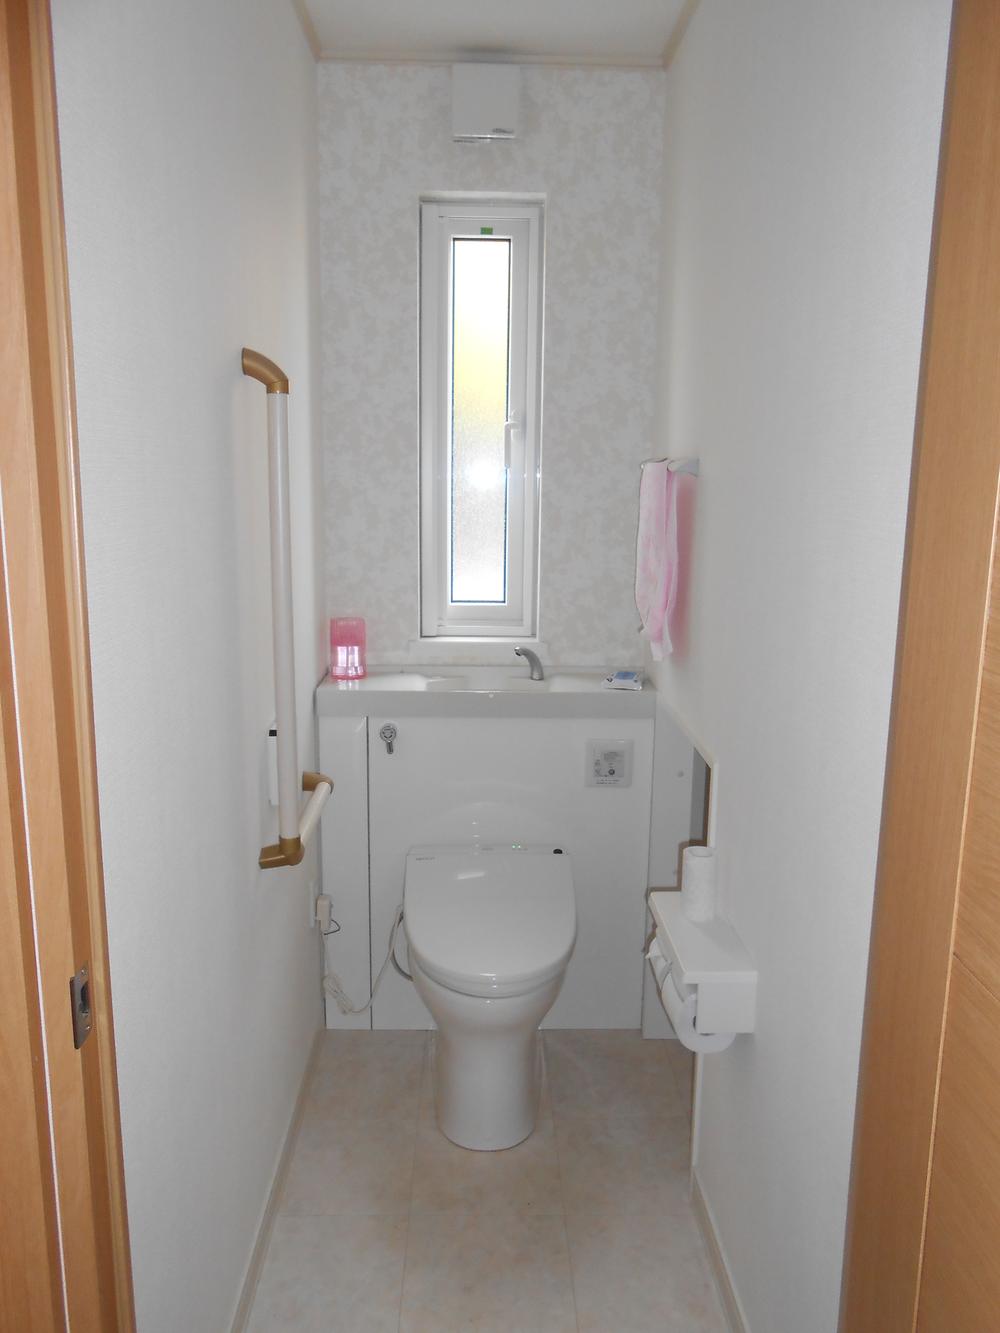 Toilet. Indoor (February 15, 2013) Shooting